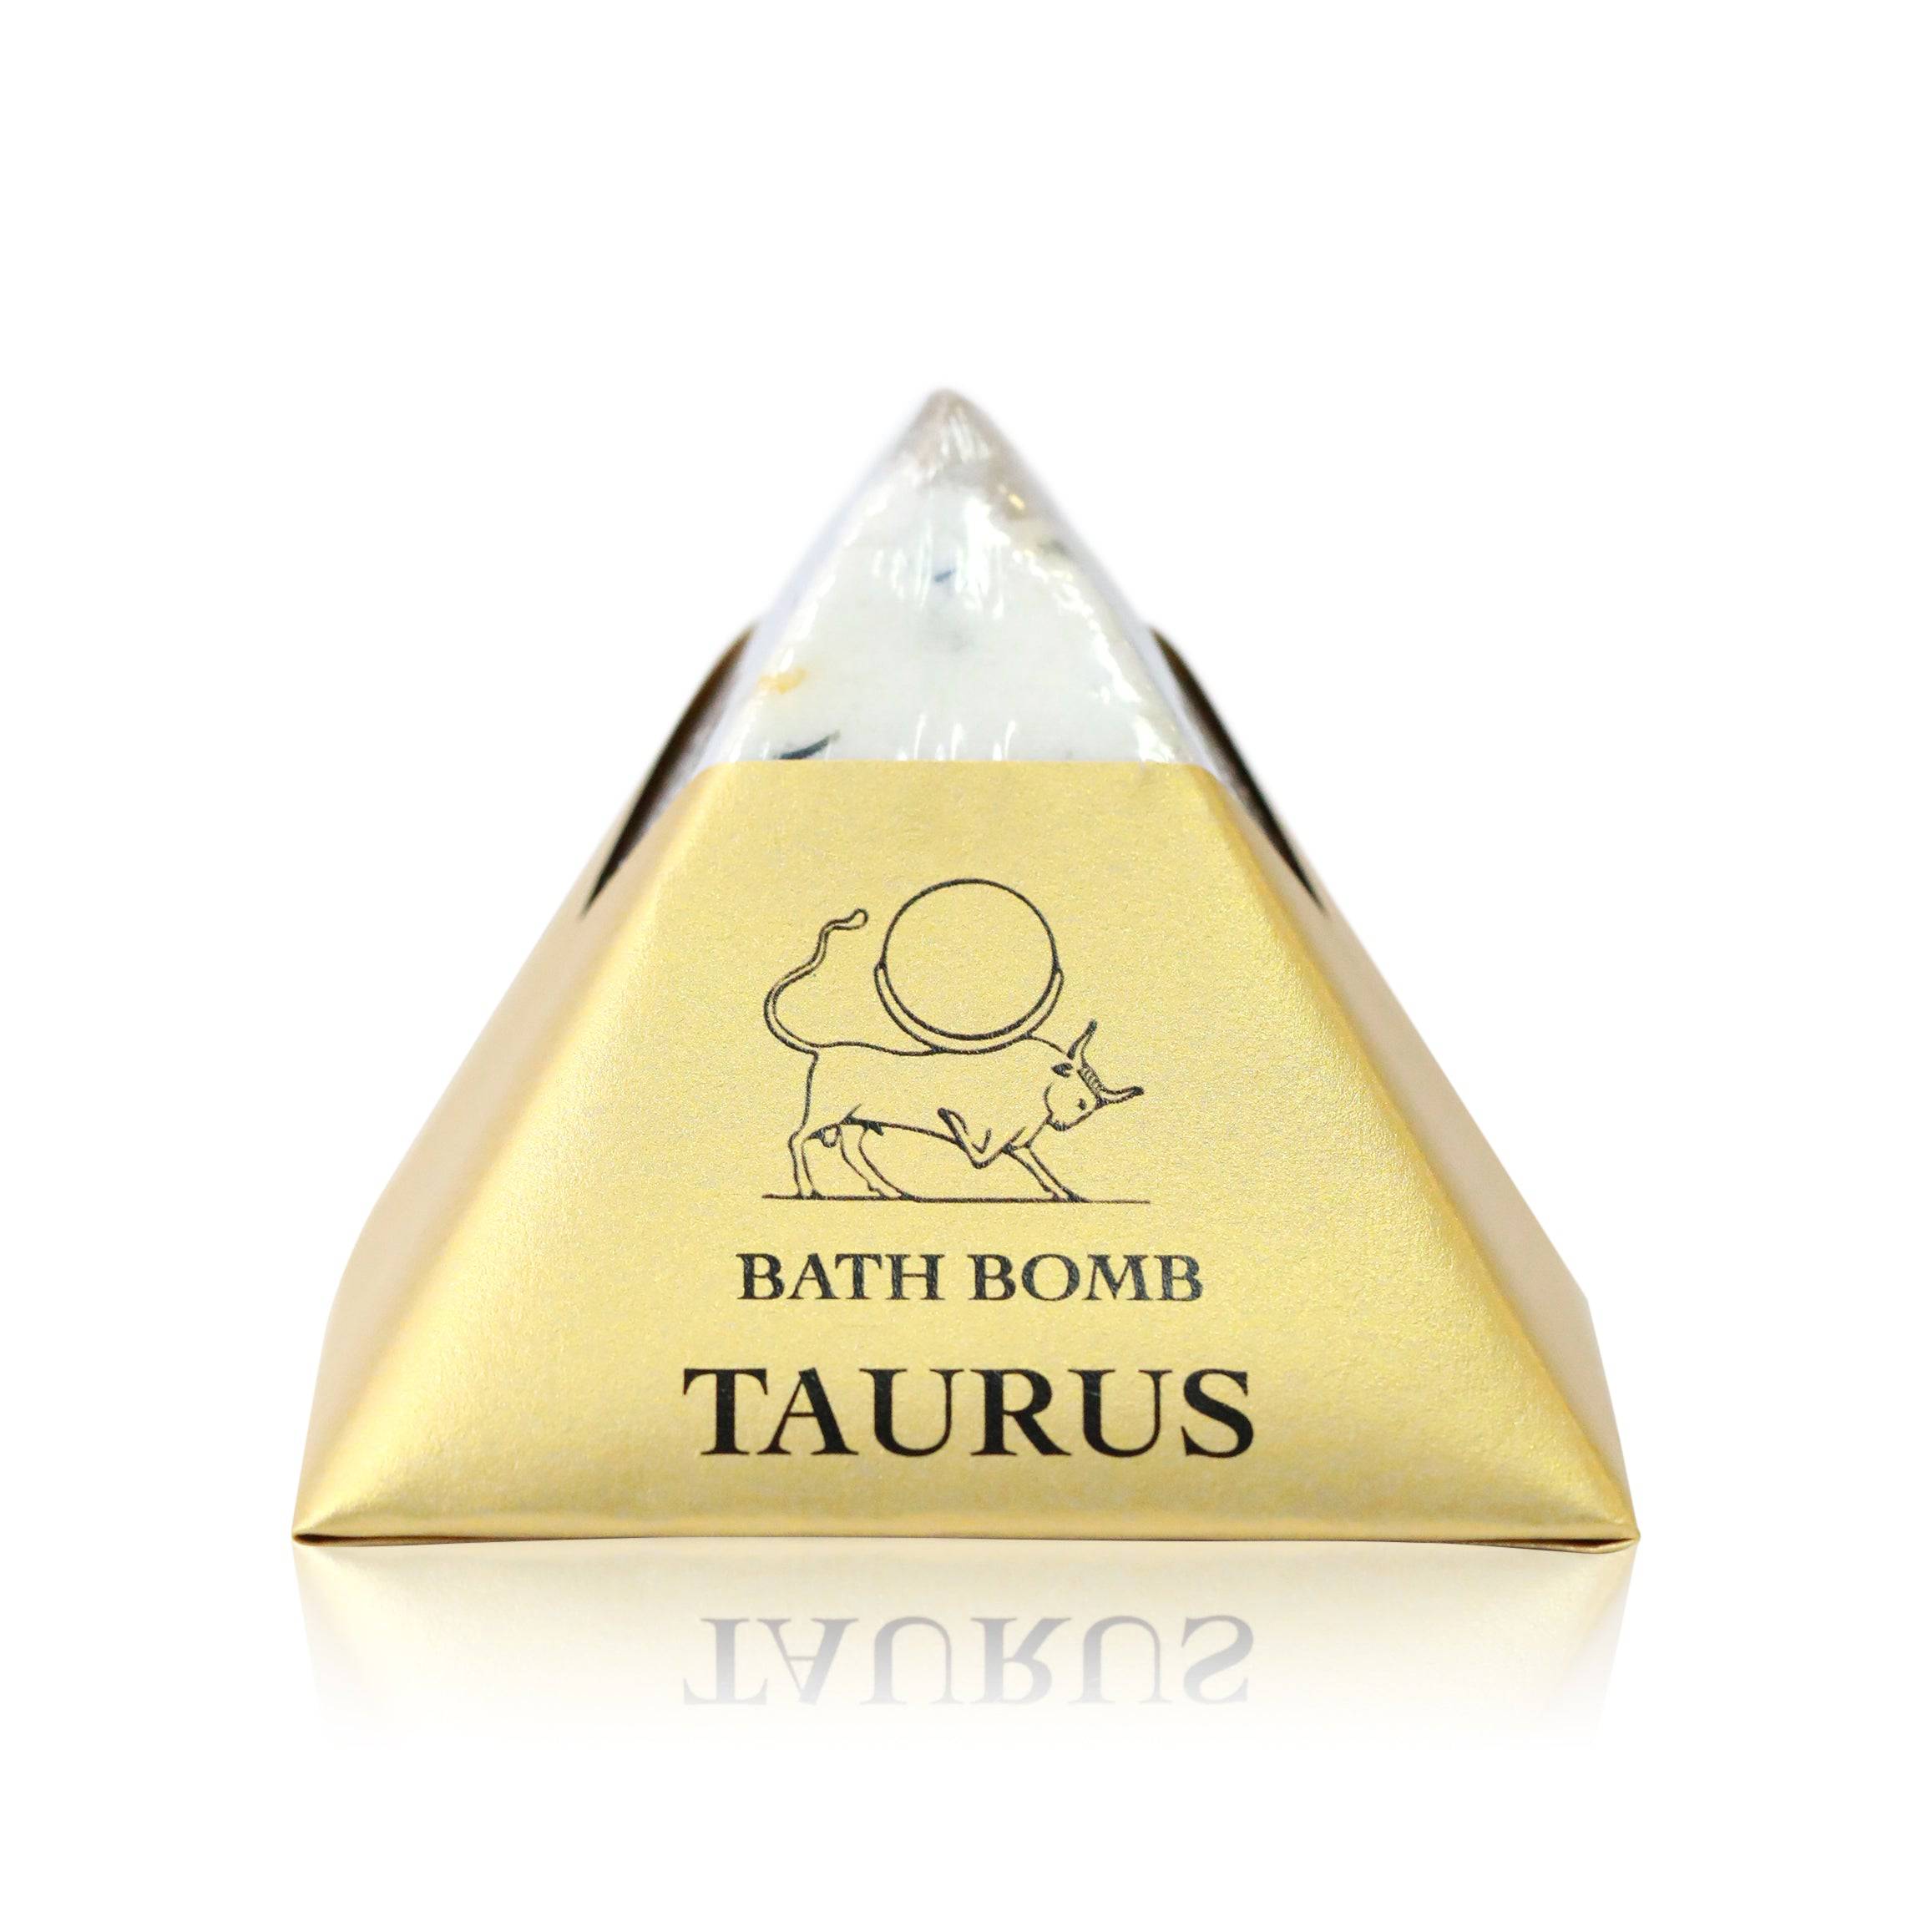 Taurus Zodiac Sign Pyramid Bath Bomb - The Gilded Witch